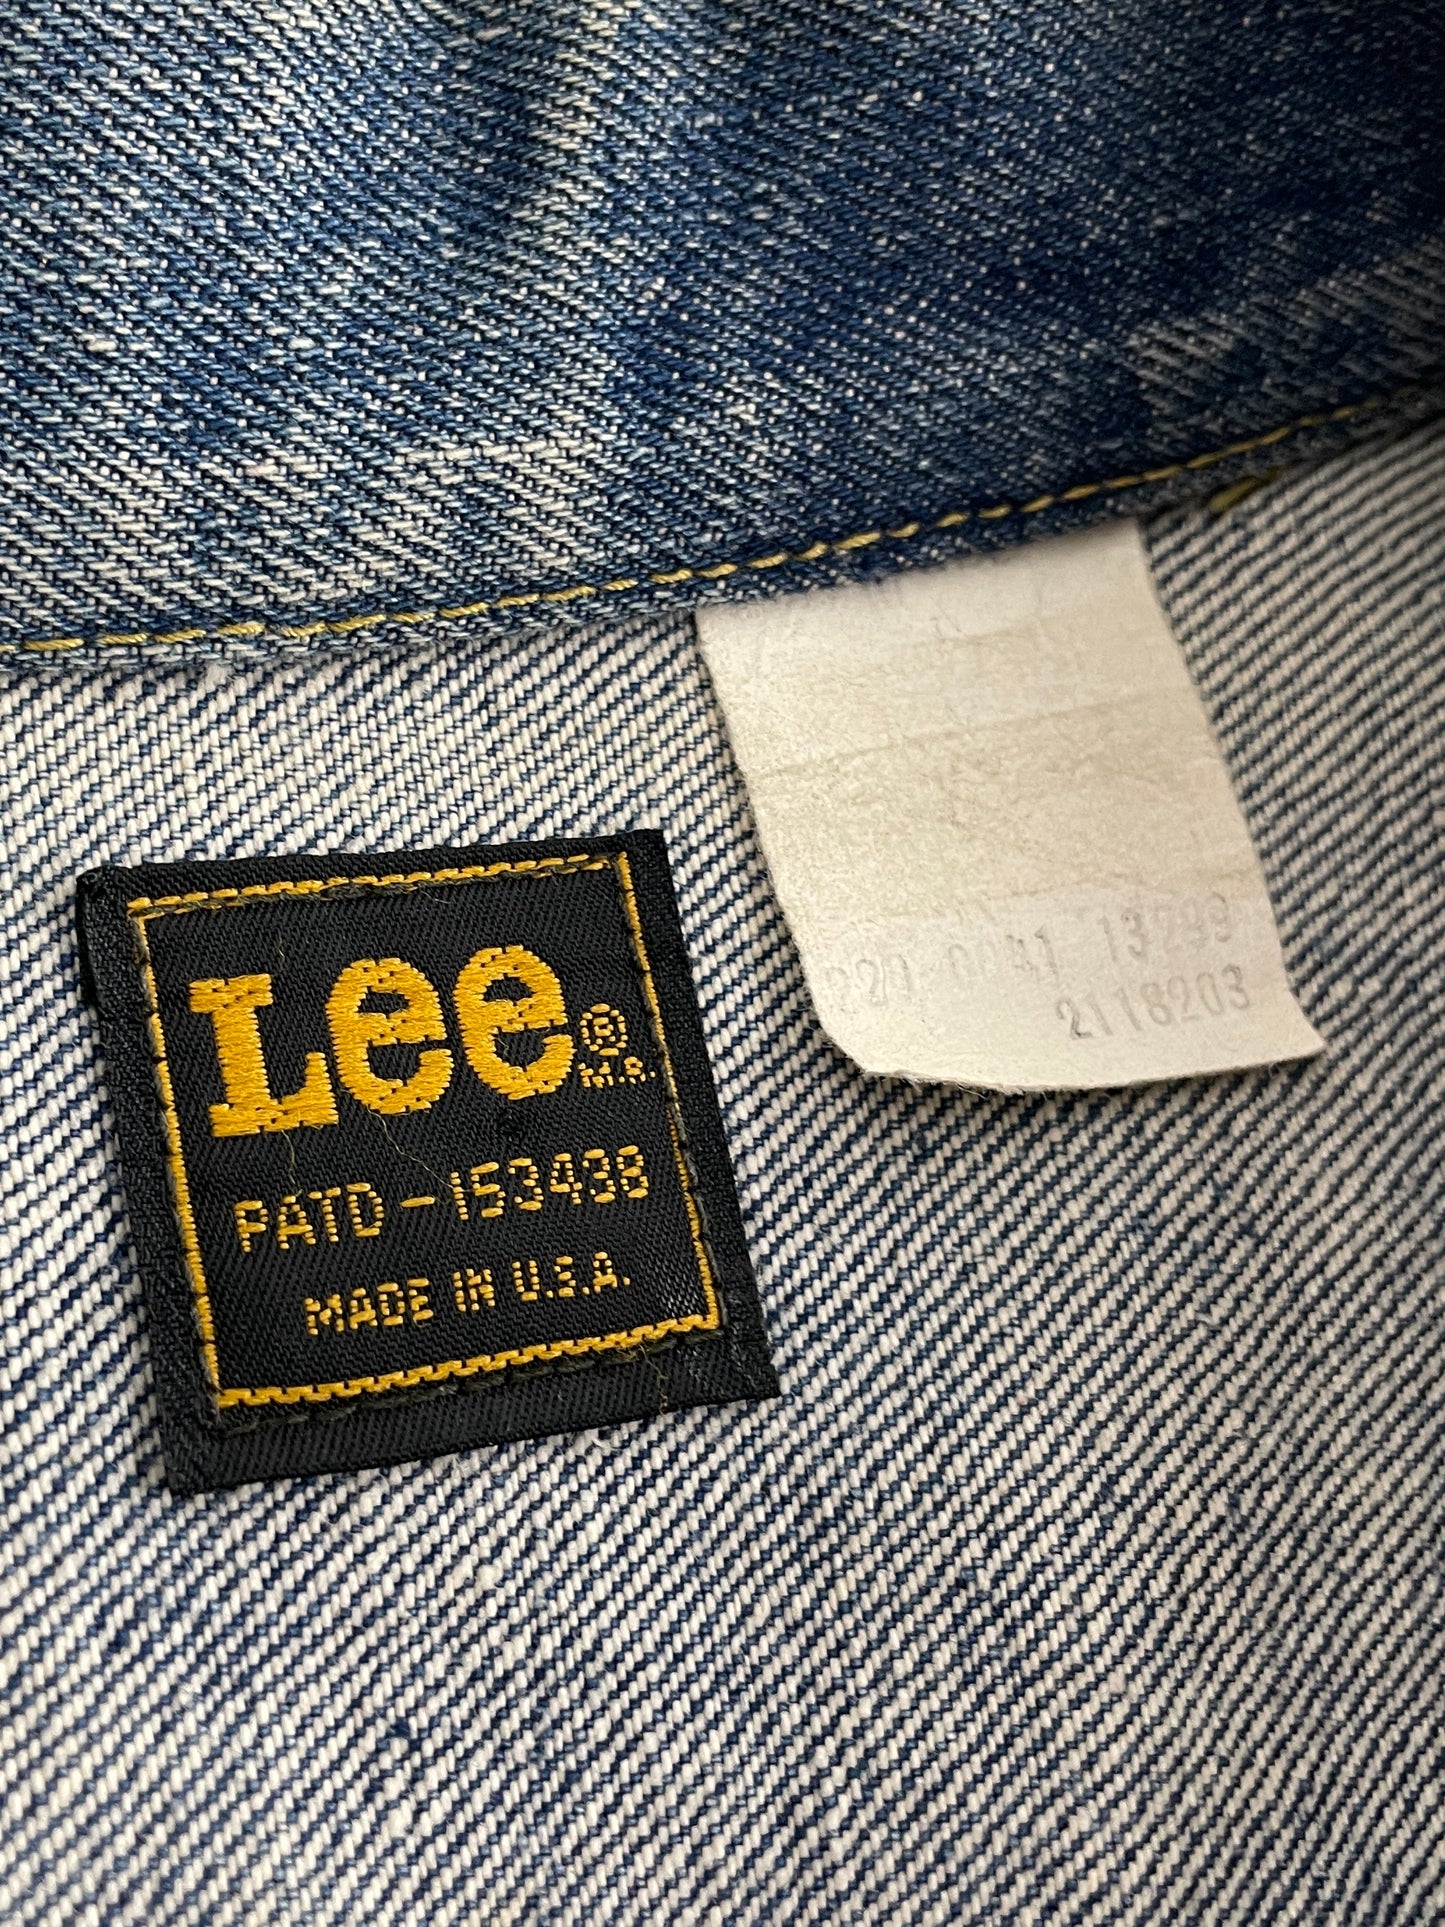 Lee Rider Denim Jacket [L]